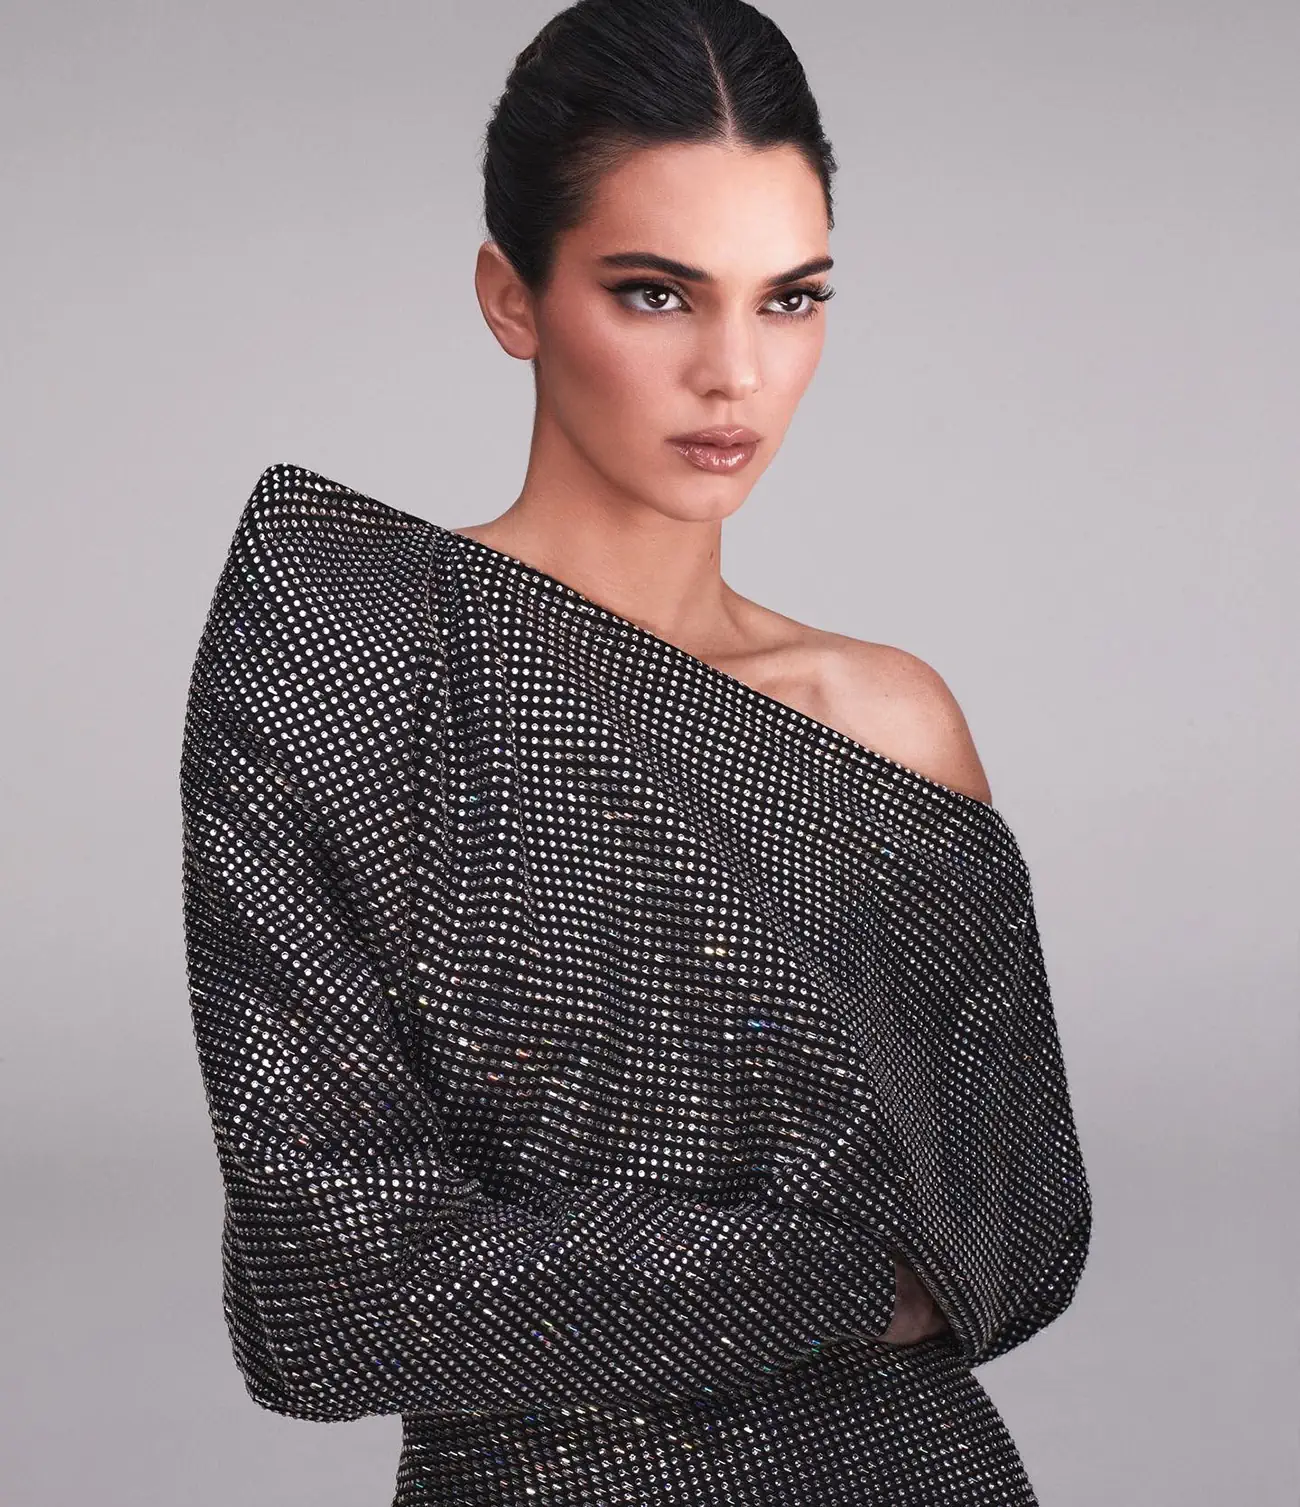 Kendall Jenner steps into spotlight as L’Oréal Paris' new global ambassador